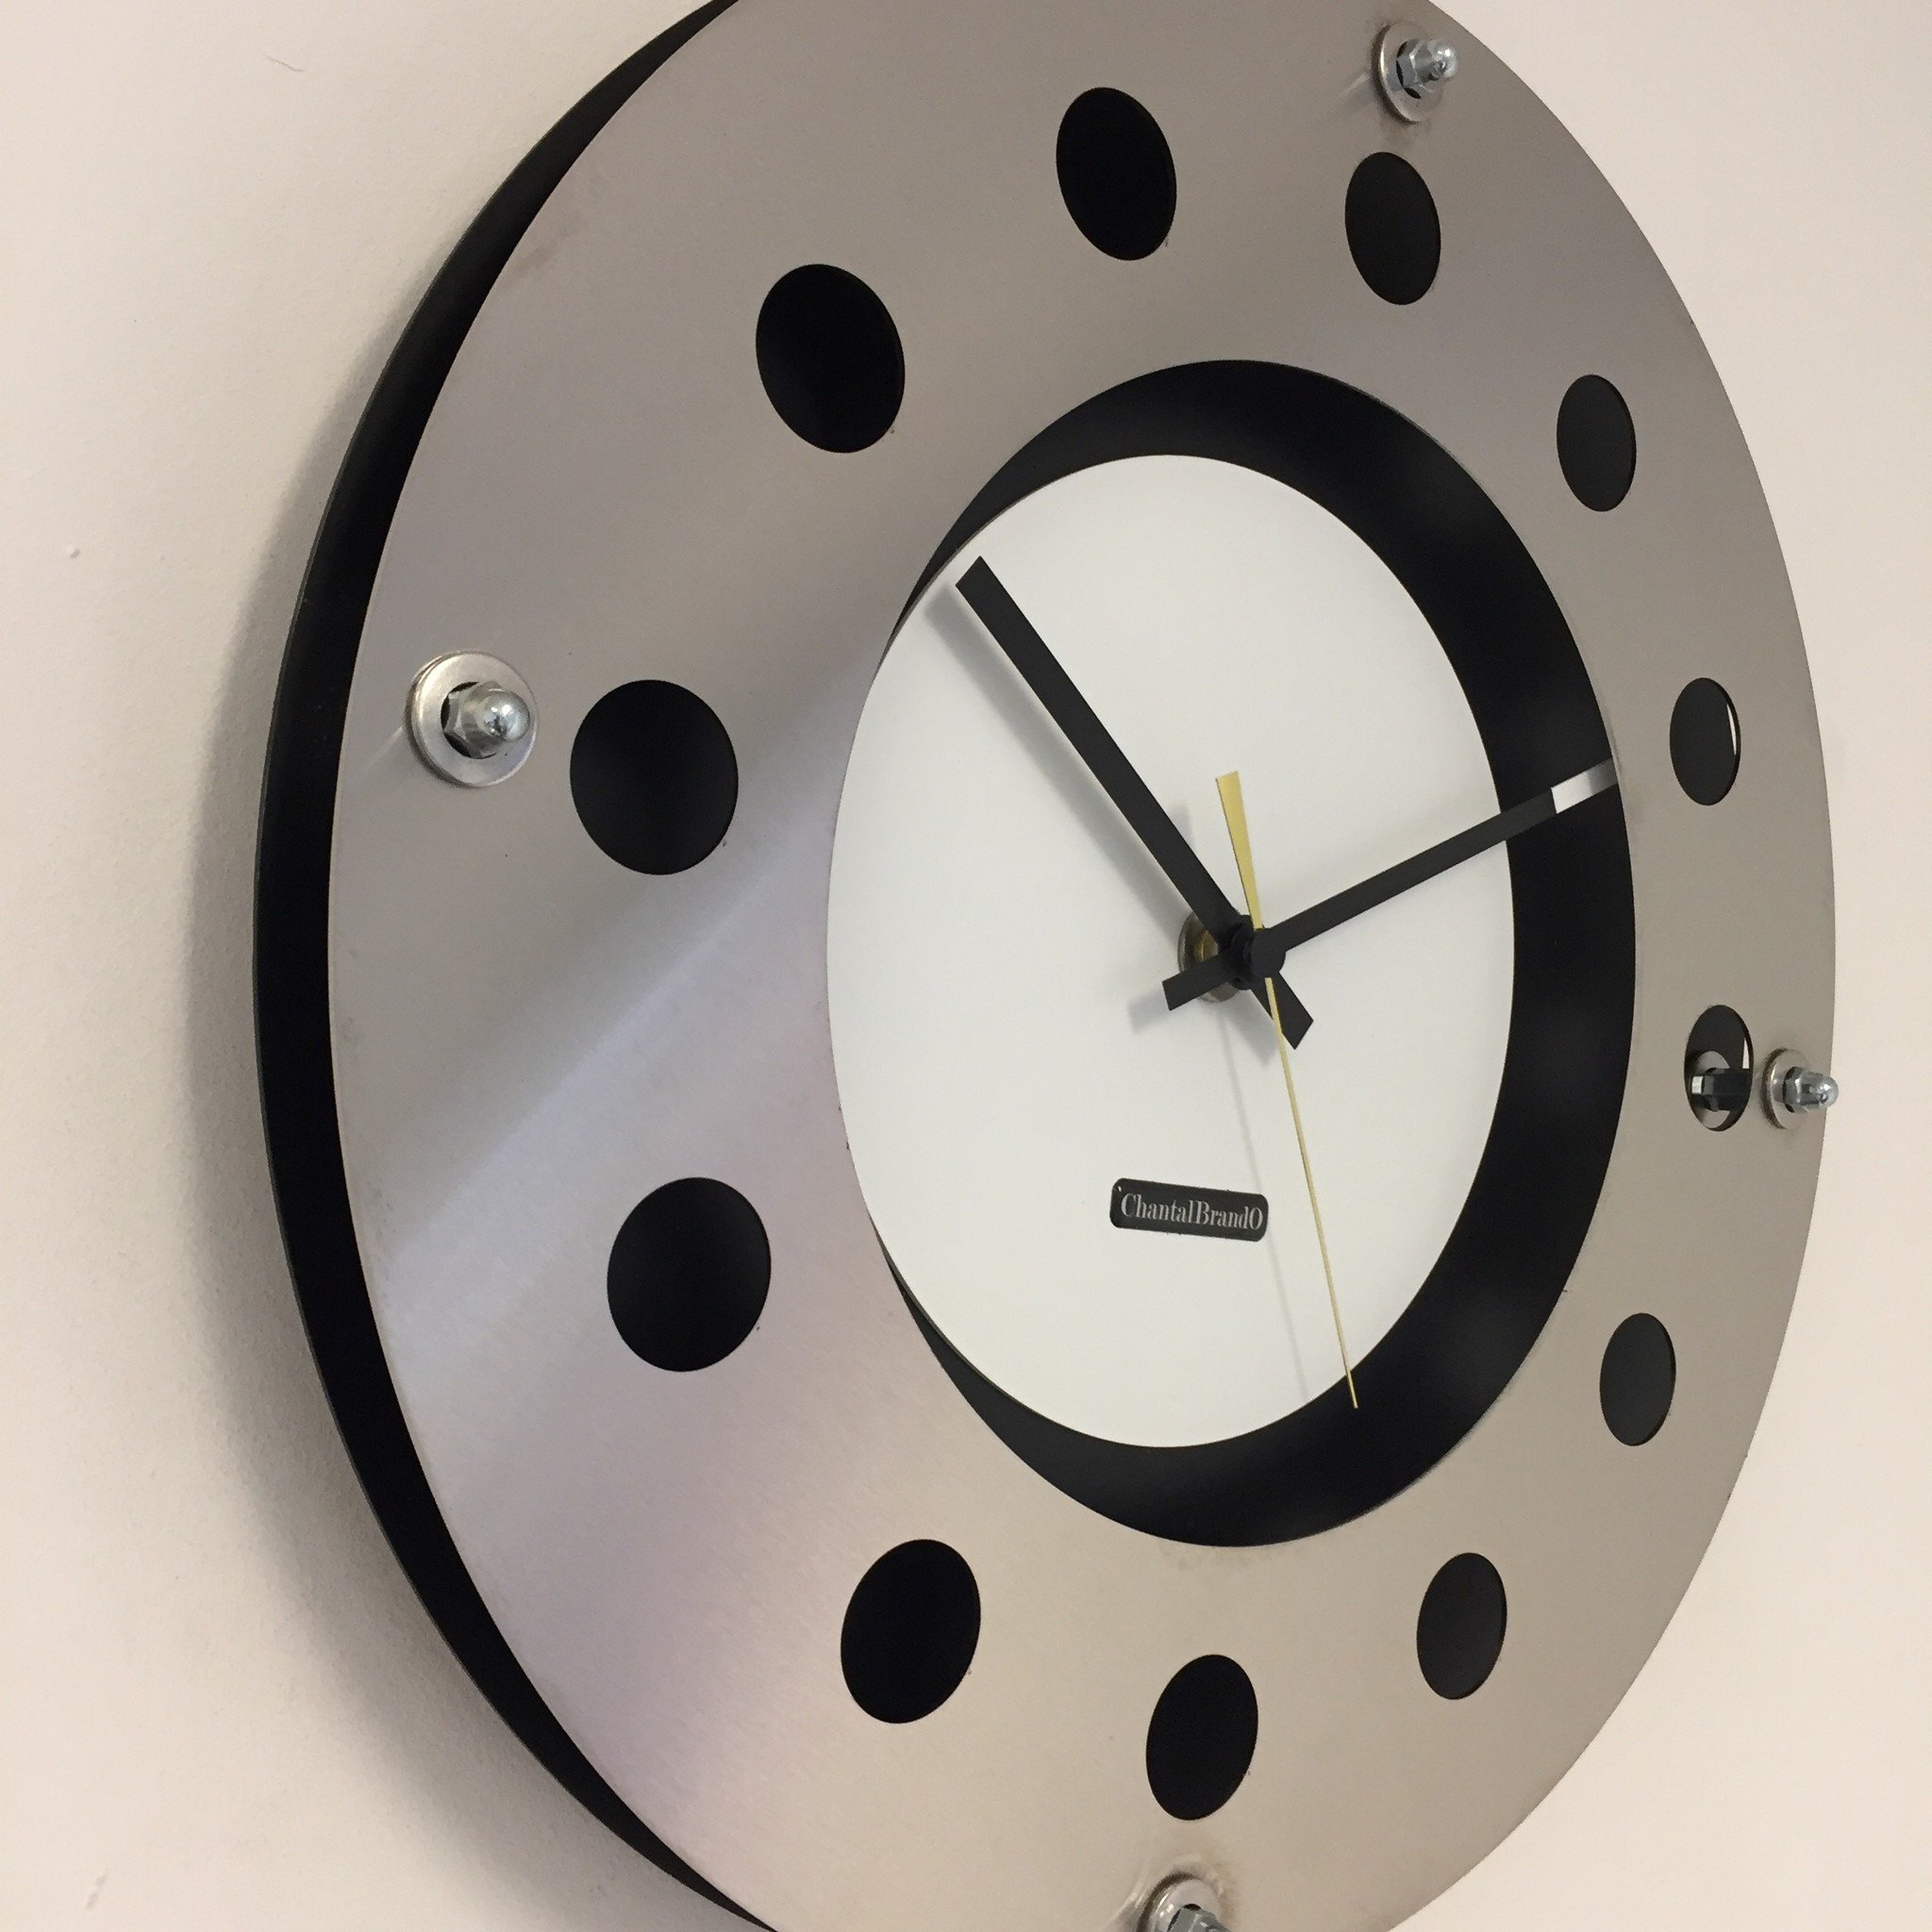 ChantalBrandO Design - Wall clock Mecanica Fully Black With White Color Small Inside Circle Black Gold Pointer Modern Dutch Design Handmade 40 cm